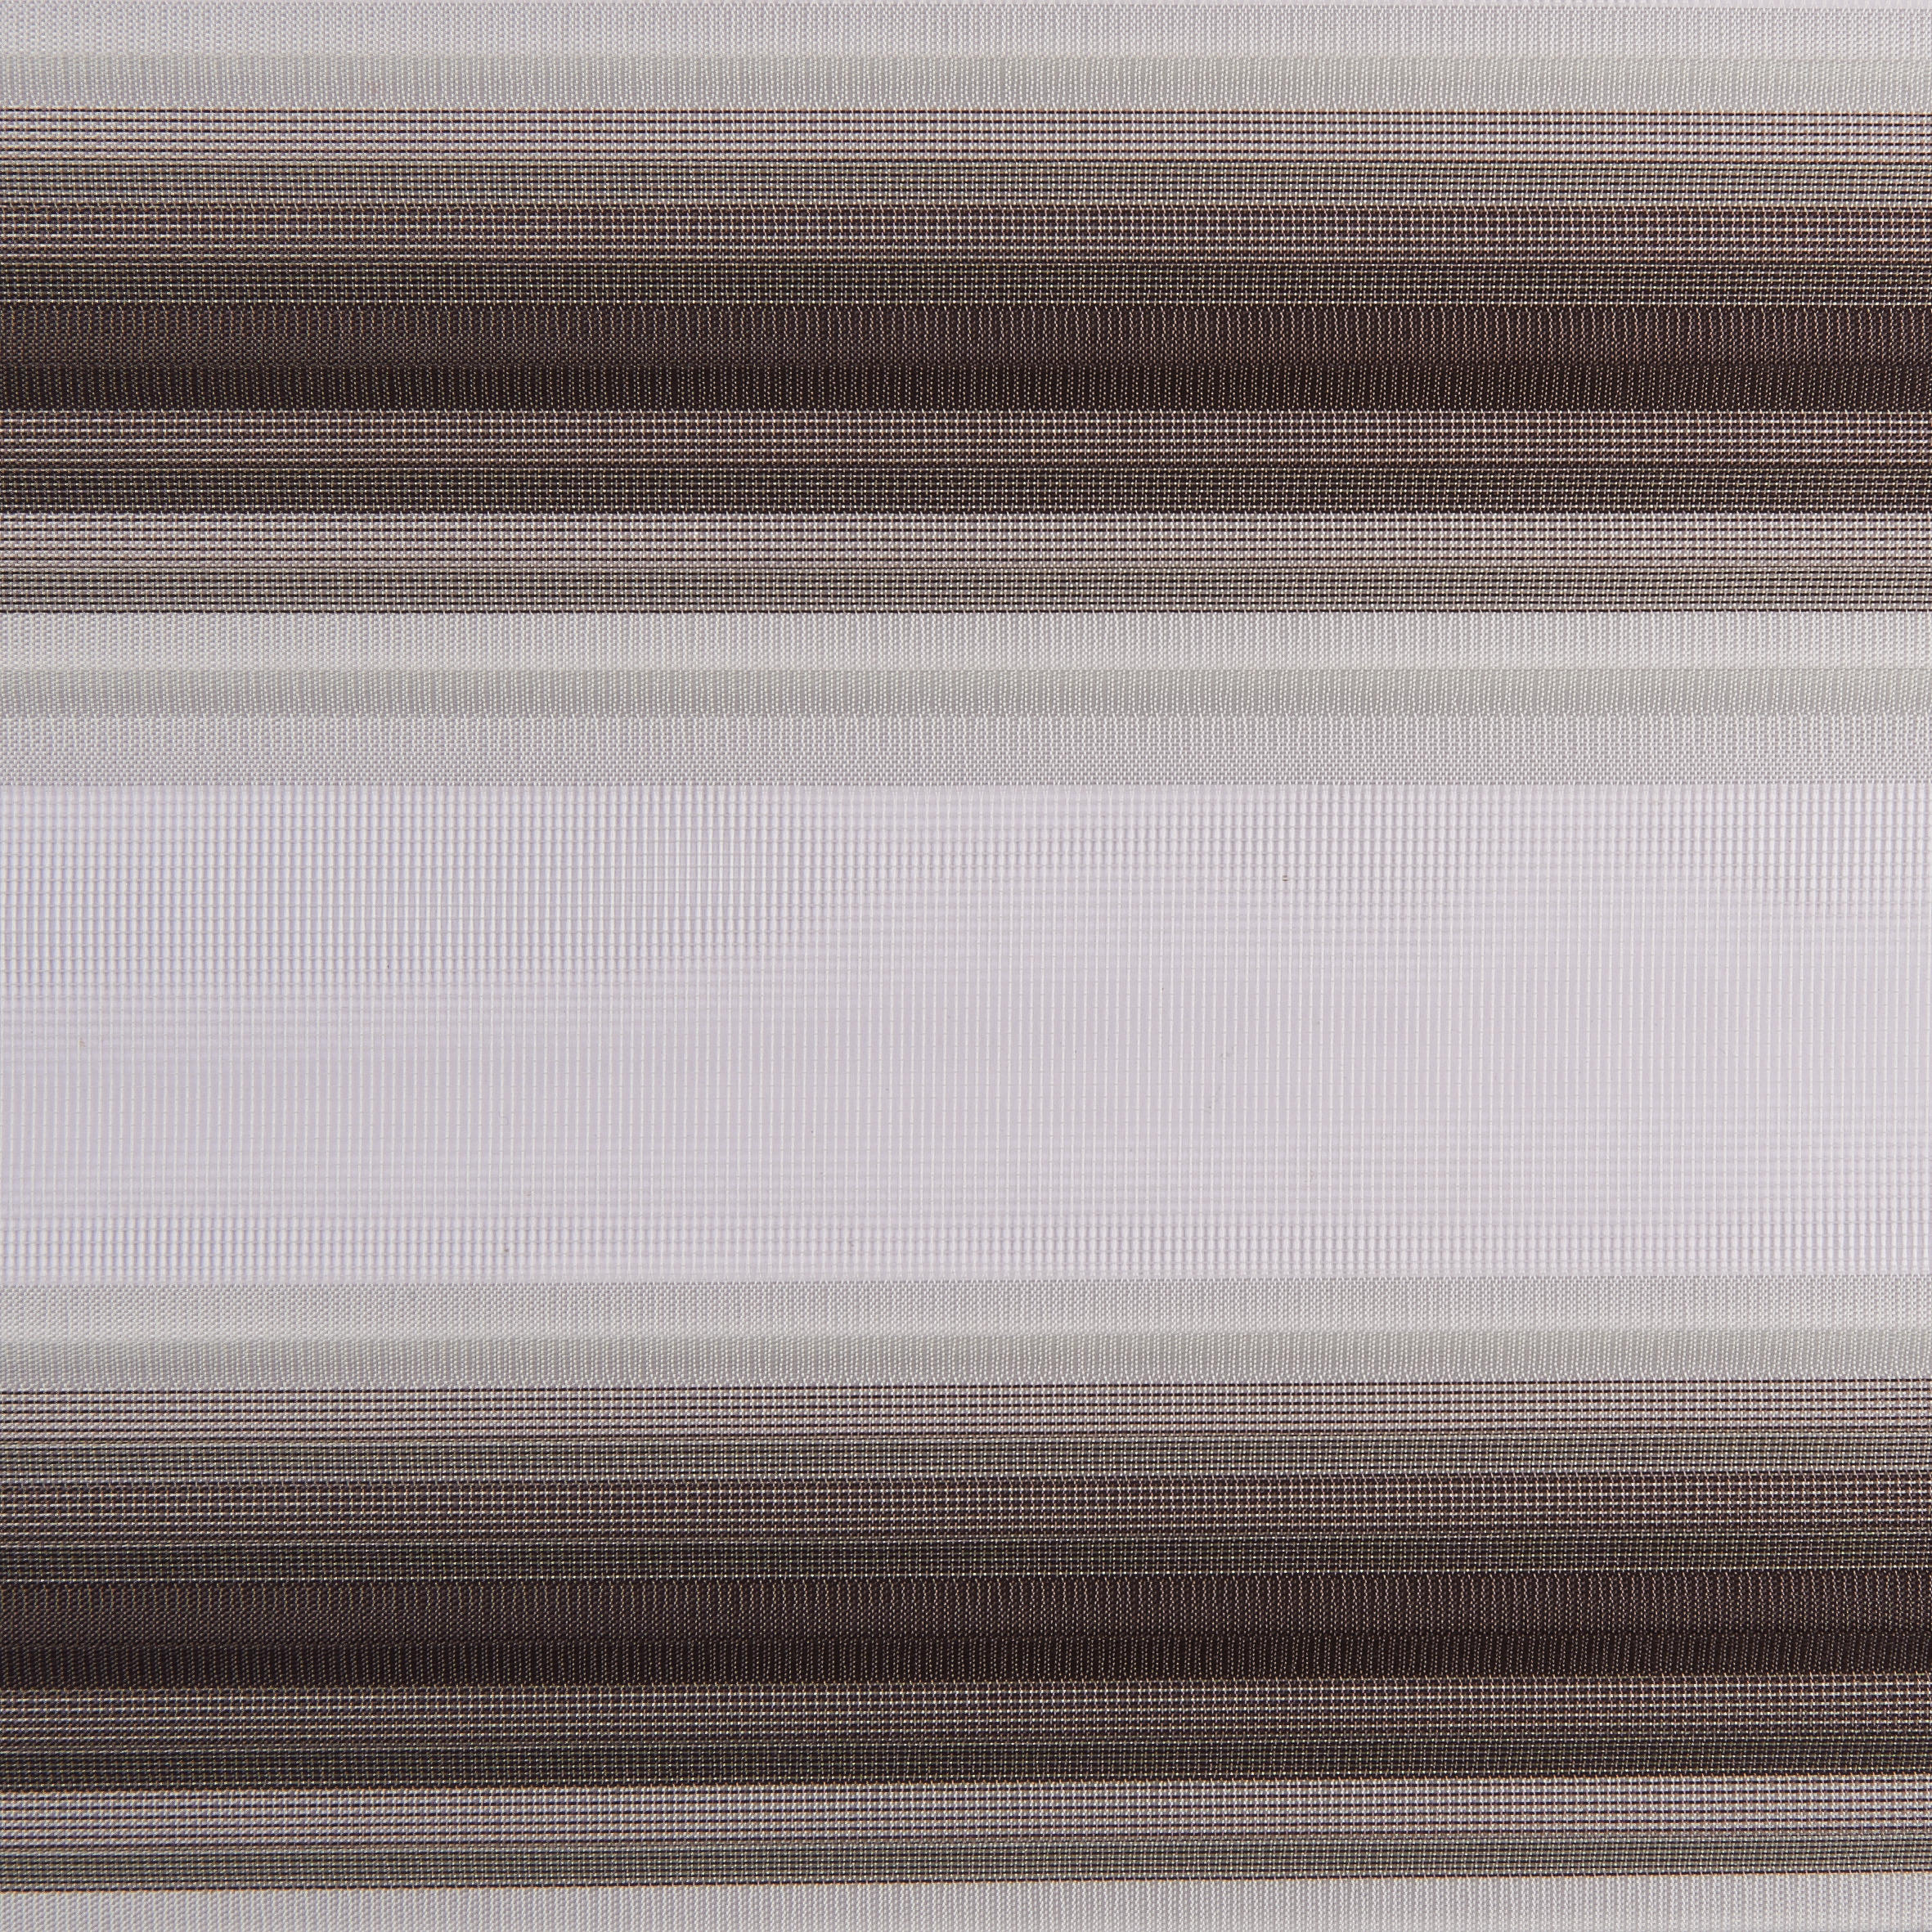 Schiebevorhang Timba Grau B/l: Ca. 60x245 Cm Timba - grau (60,00/245,00cm)